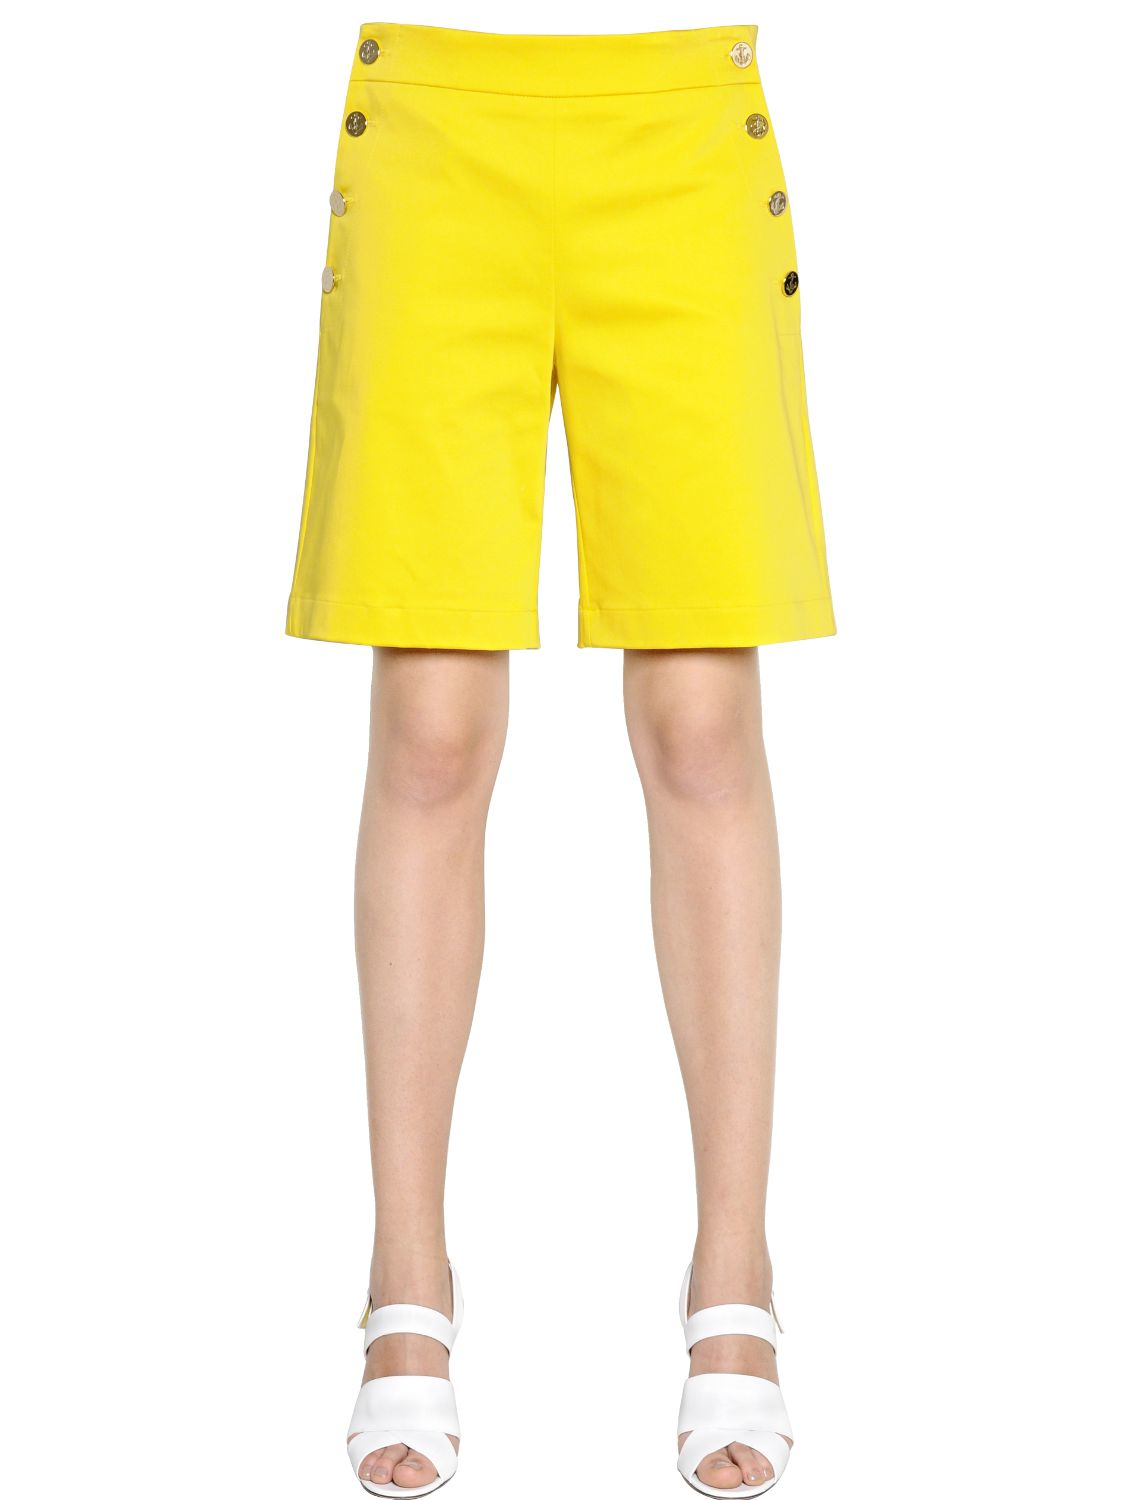 Max Mara Stretch Cotton Satin Bermuda Shorts in Yellow - Lyst